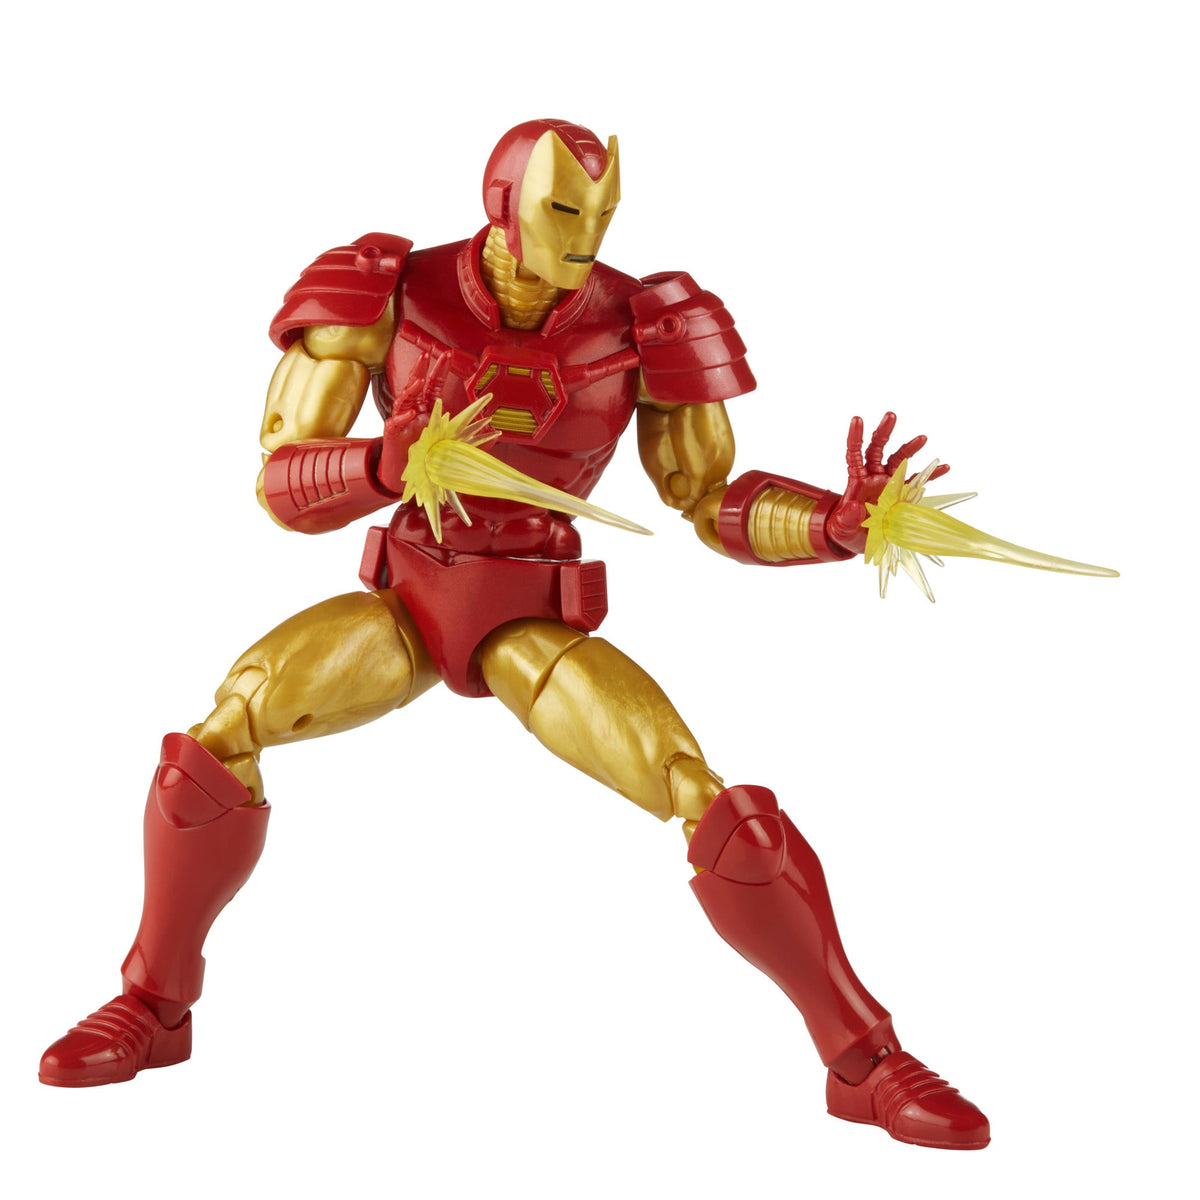 Marvel Legends Series: Iron Man (Extremis) Marvel Classic Comic Action  Figure (6”)